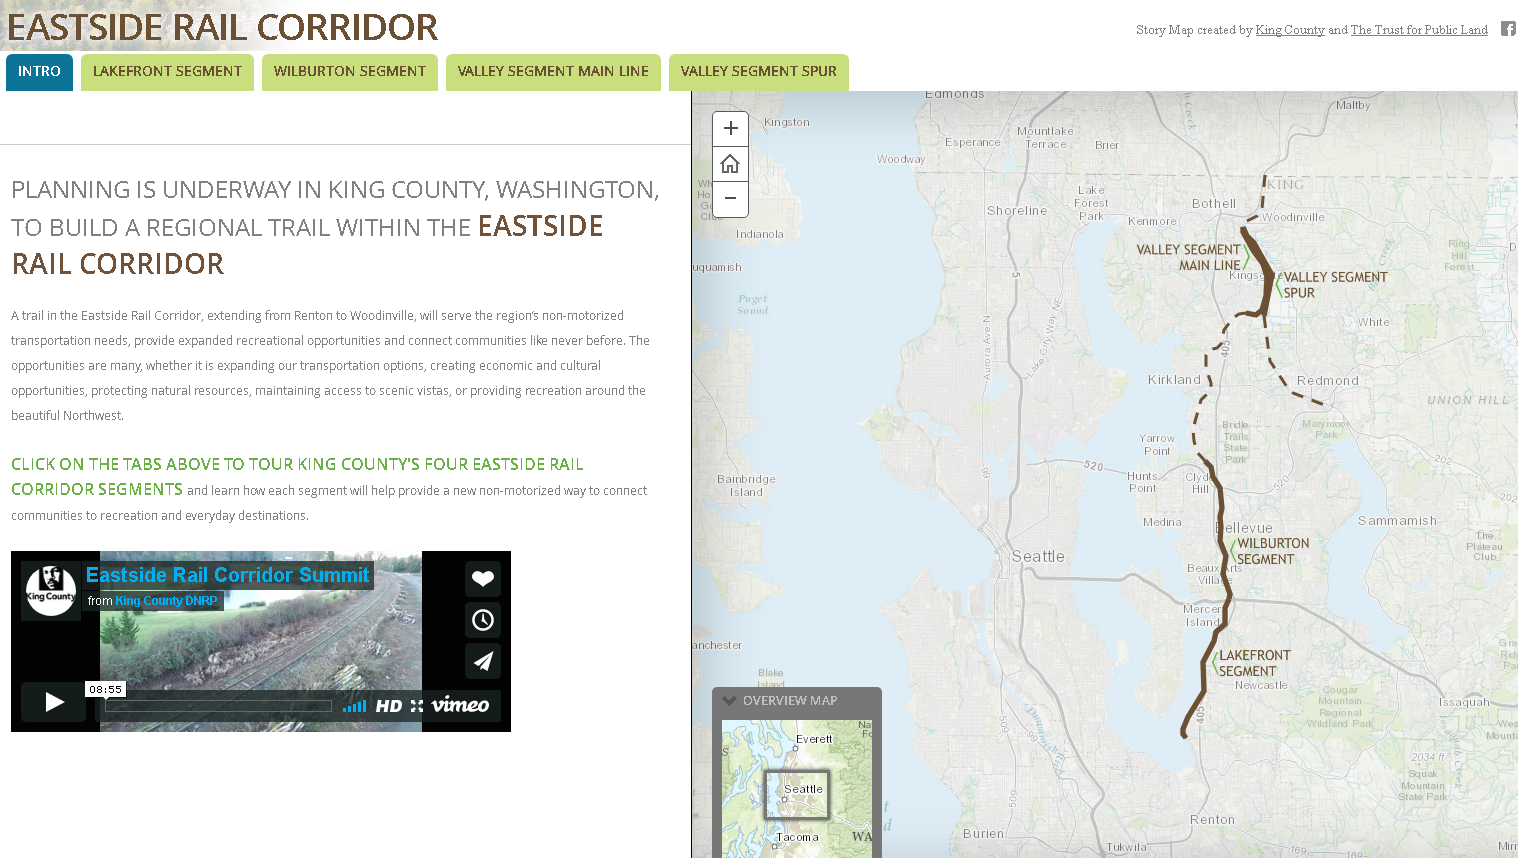 A story map exploring four segments of the Eastside Rail Corridor in King County, Washington.